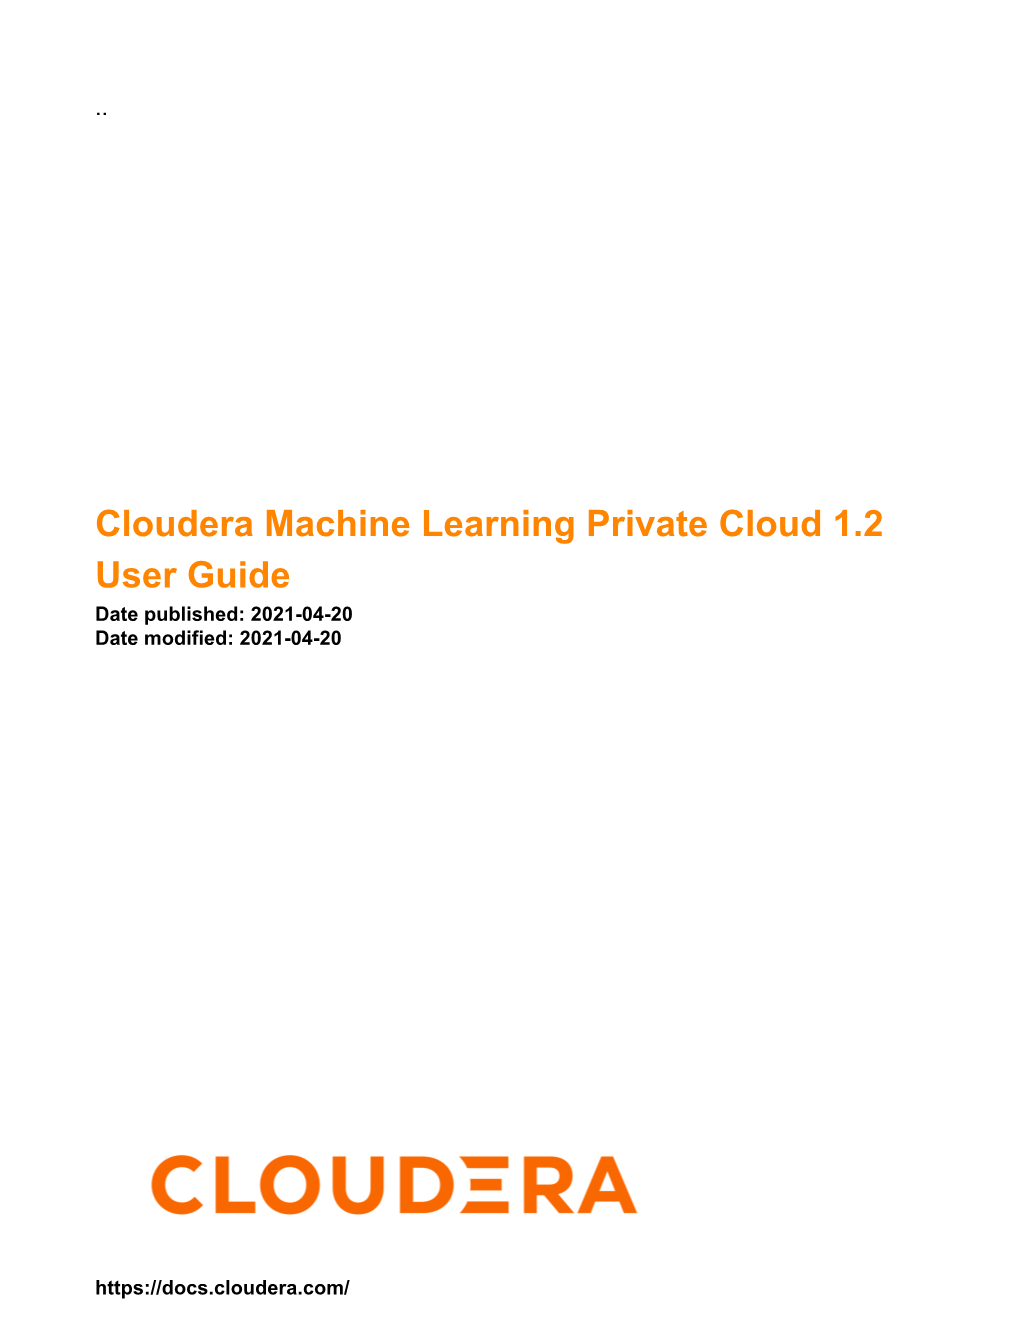 Cloudera Machine Learning Private Cloud 1.2 User Guide Date Published: 2021-04-20 Date Modified: 2021-04-20